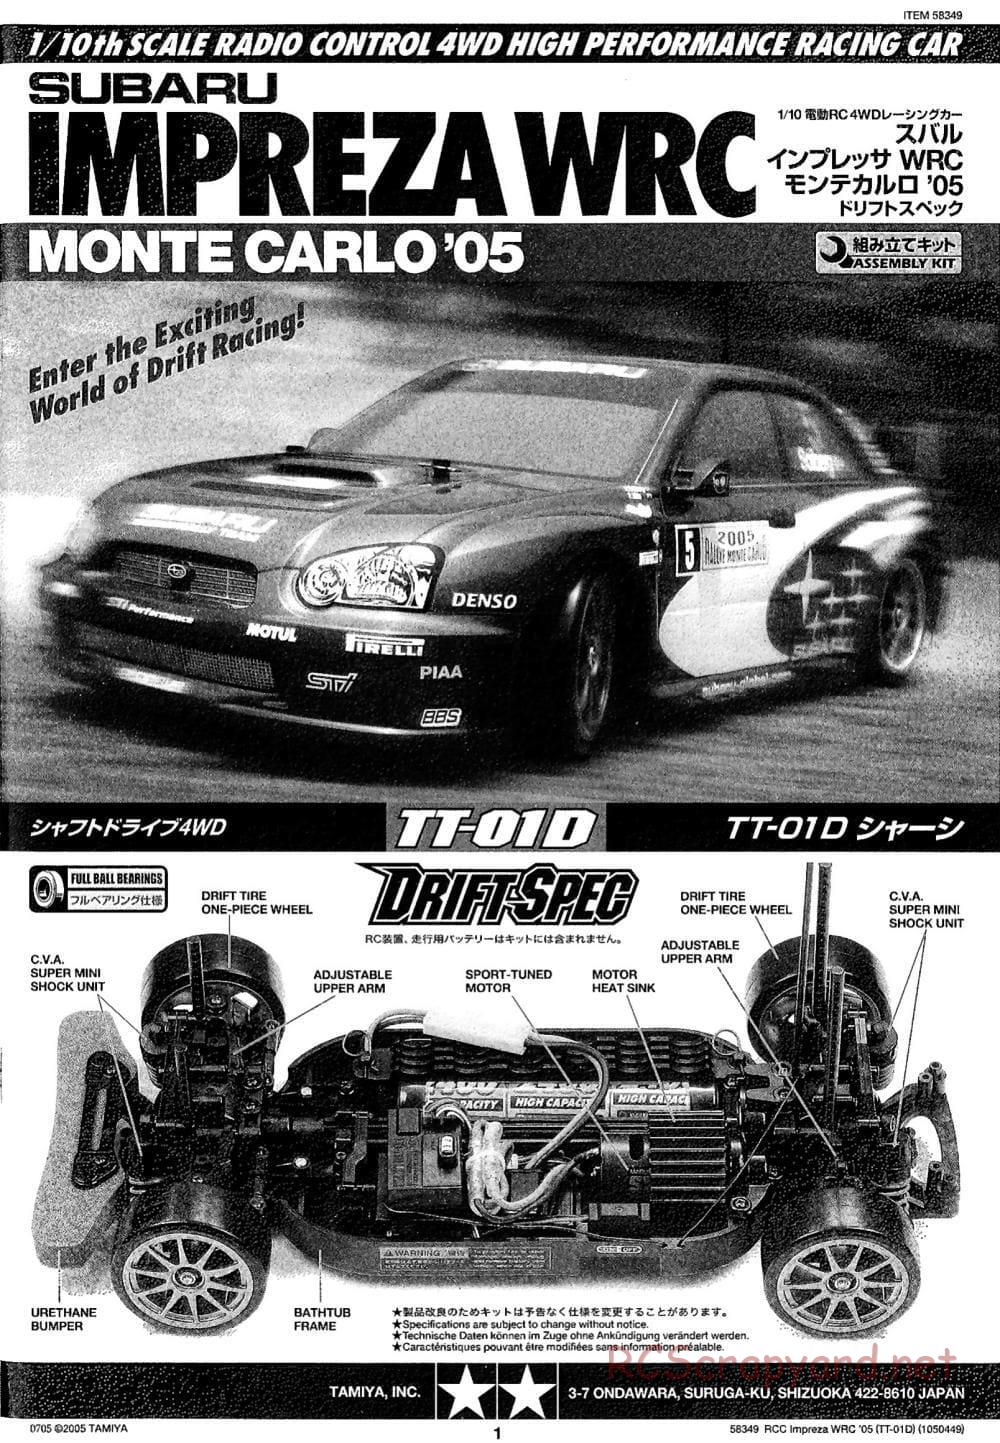 Tamiya - Subaru Impreza WRC Monte Carlo 05 - Drift Spec - TT-01D Chassis - Manual - Page 1